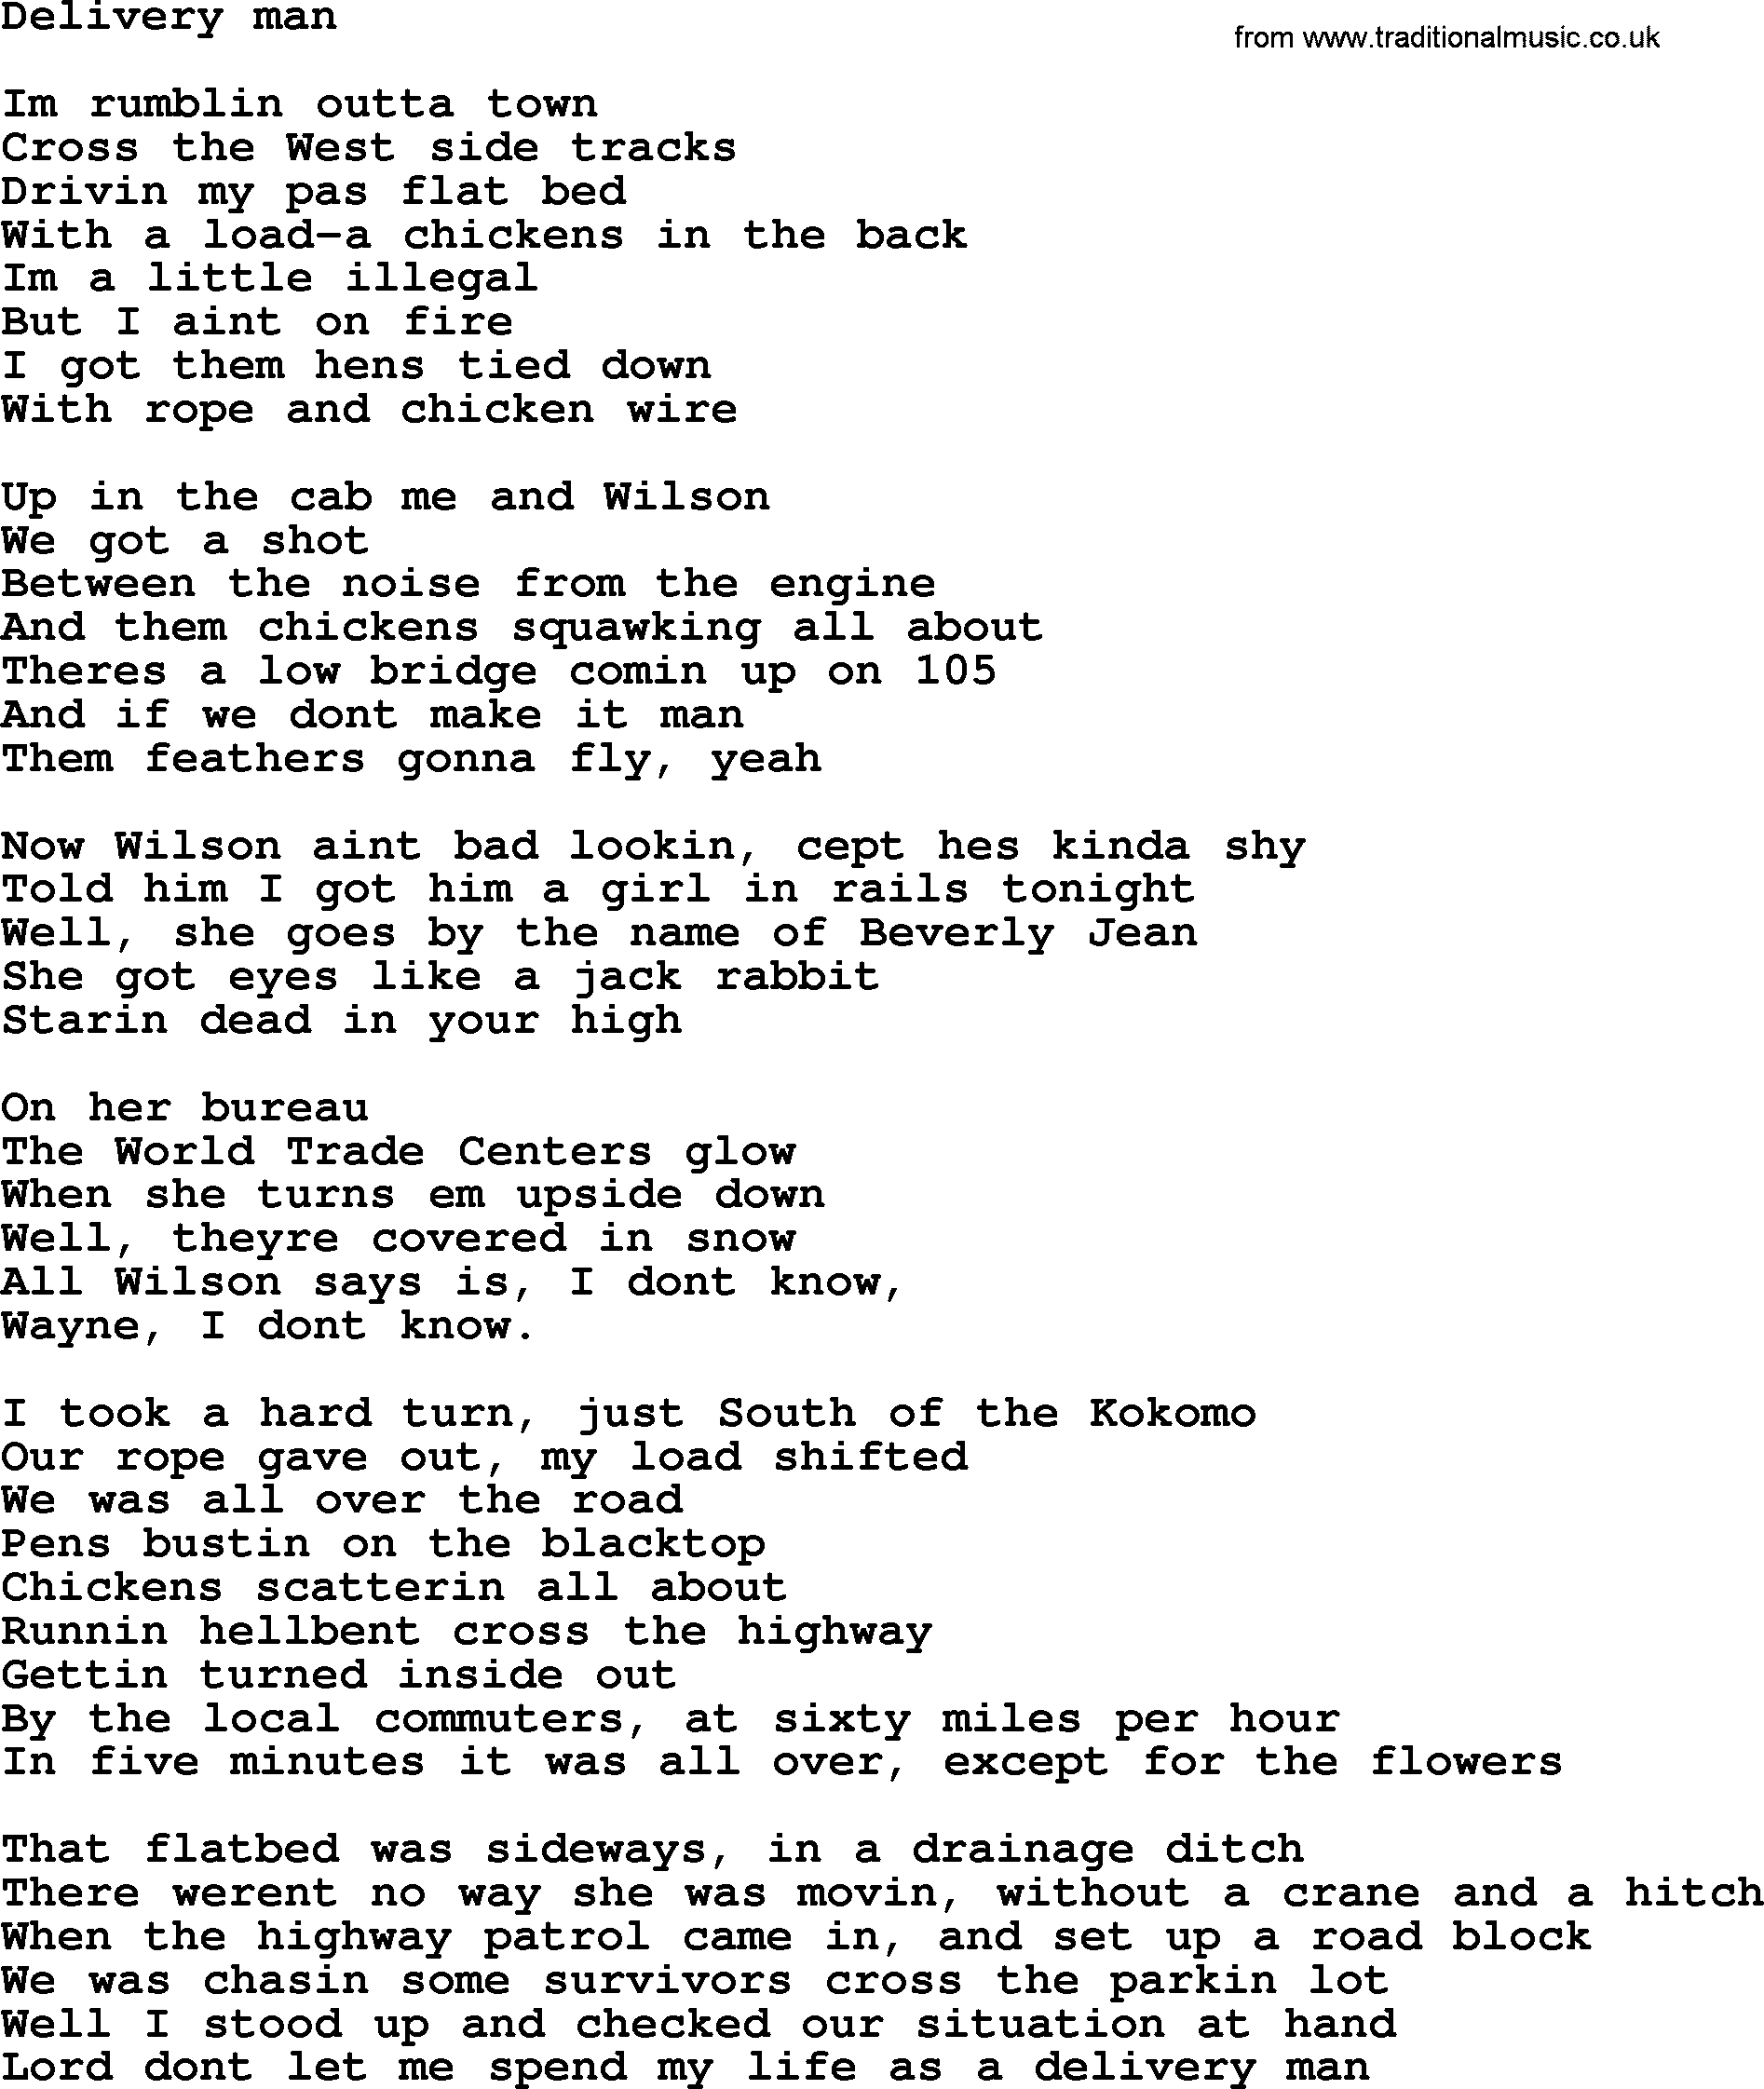 Bruce Springsteen song: Delivery Man lyrics